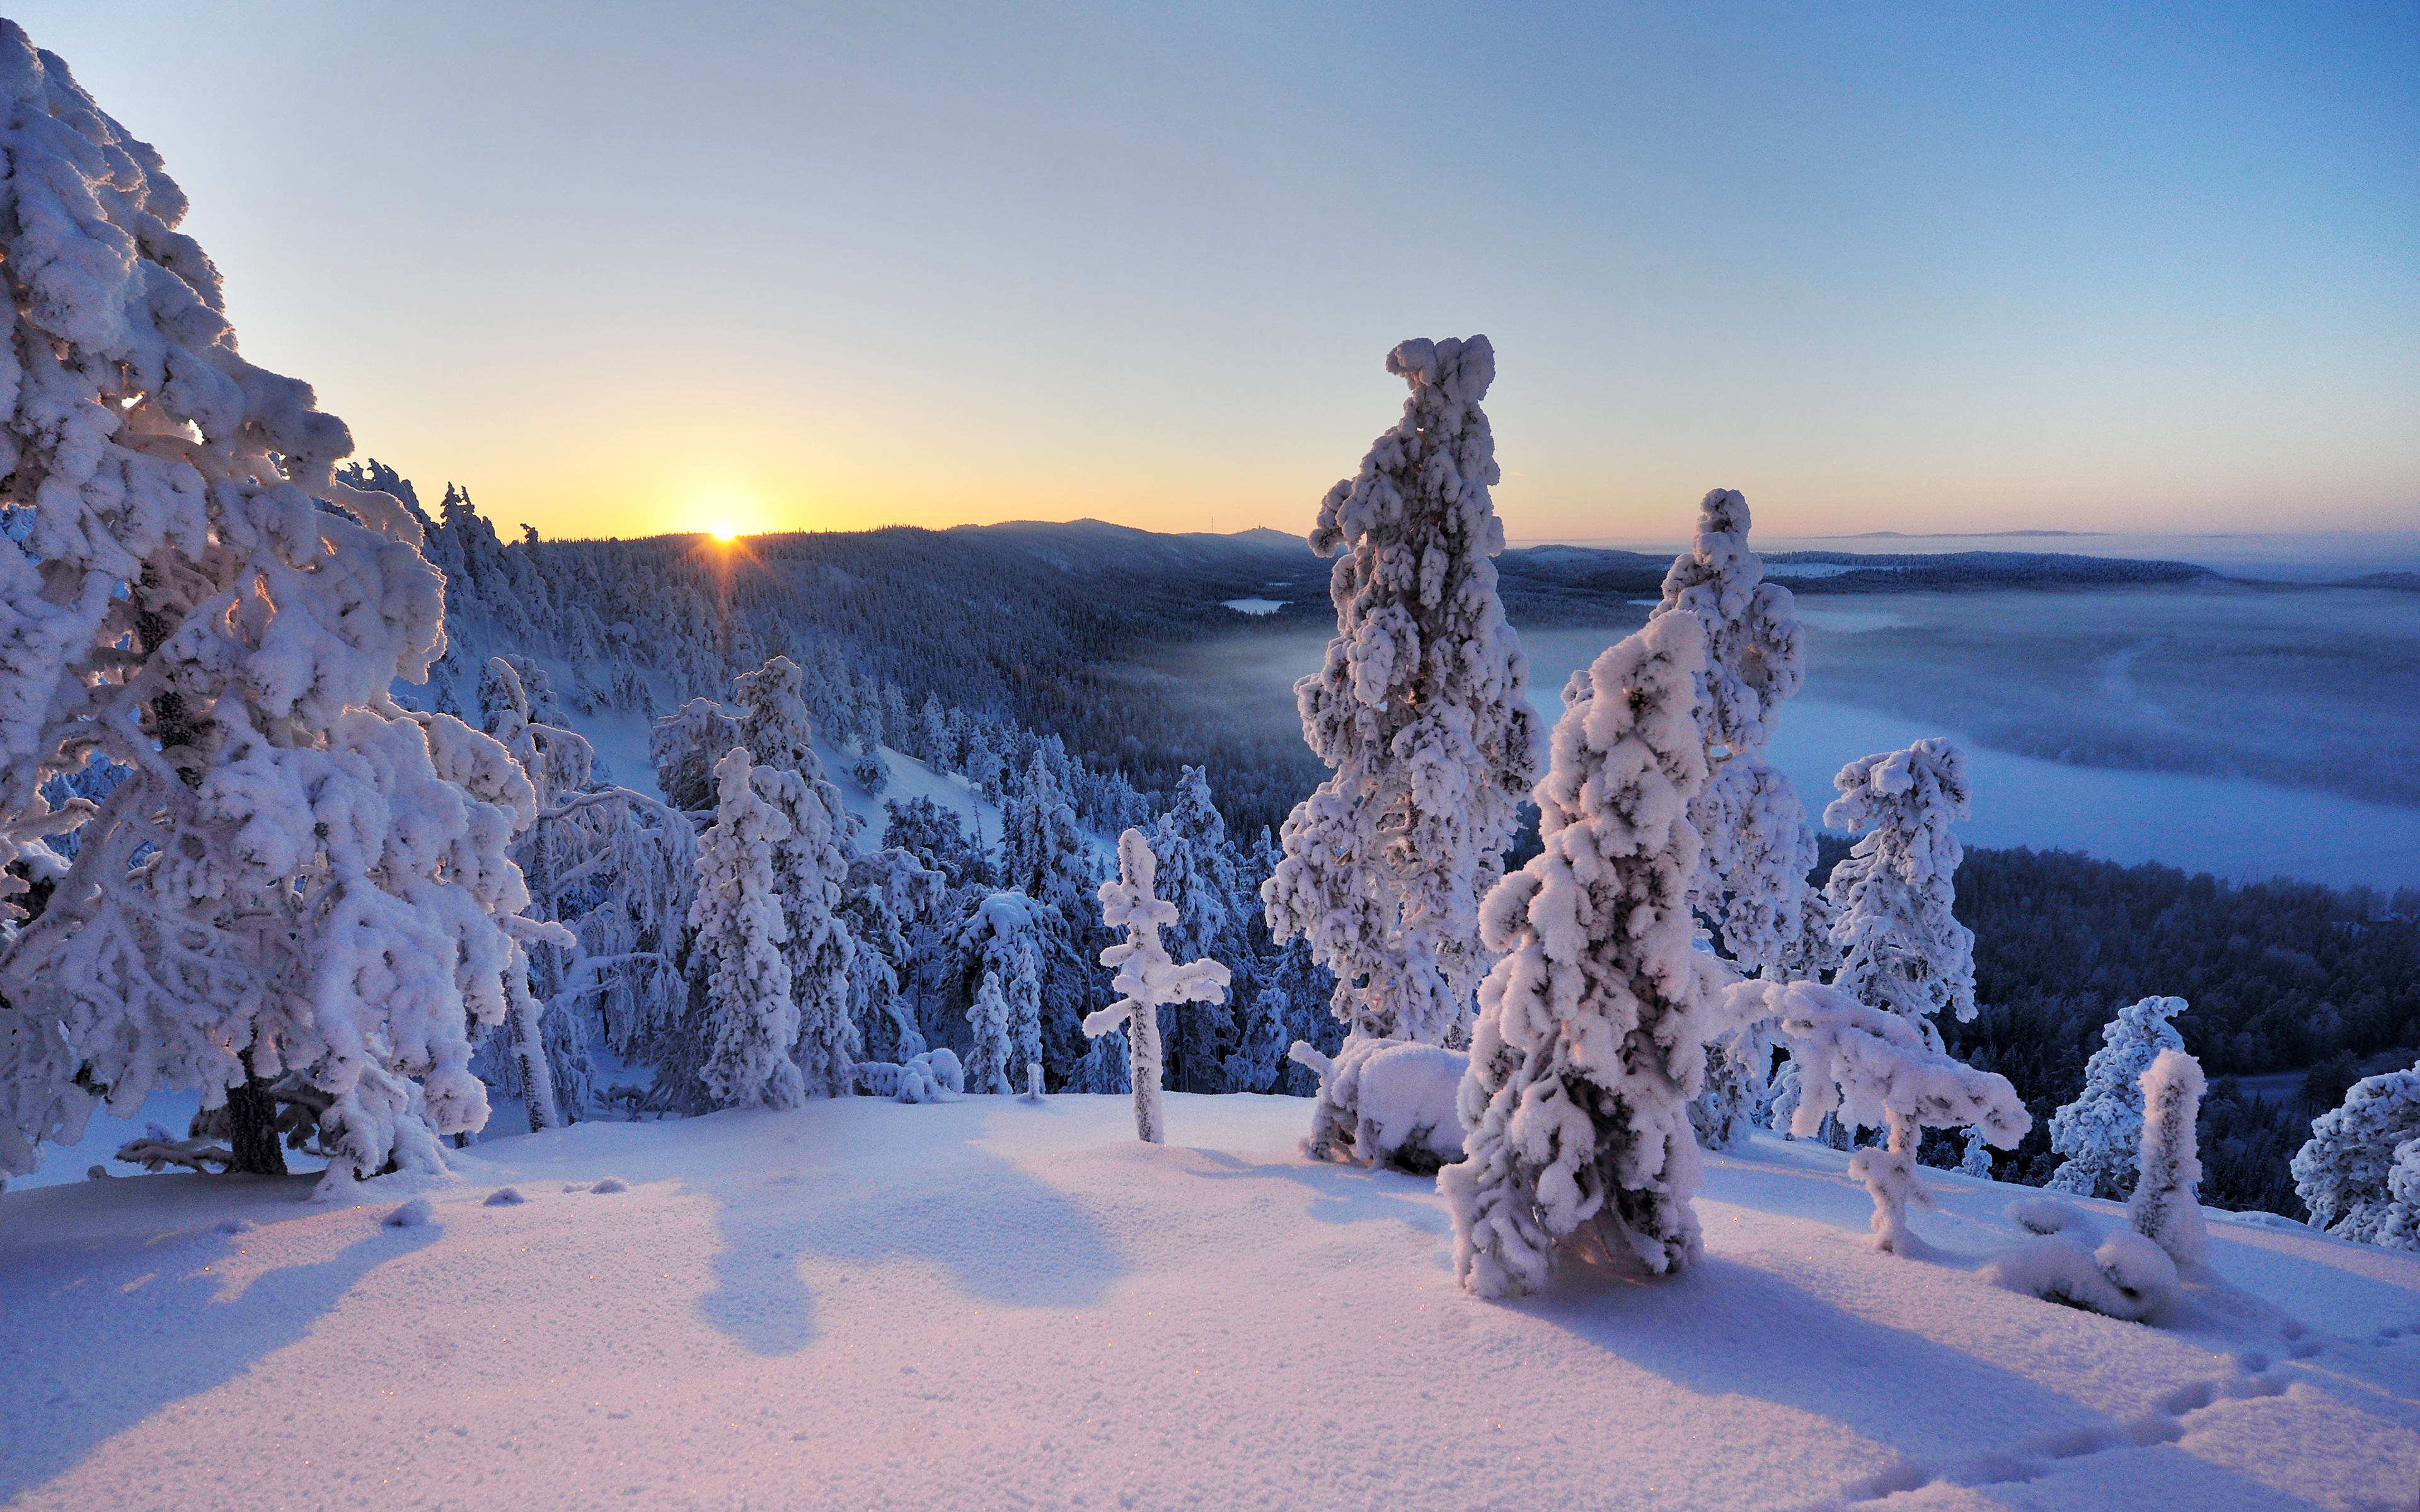 HD wallpaper, Winter, Snowy Trees, Snow Covered, Hill, Finland, Sunrise, Horizon, Konttainen Fell, Landscape